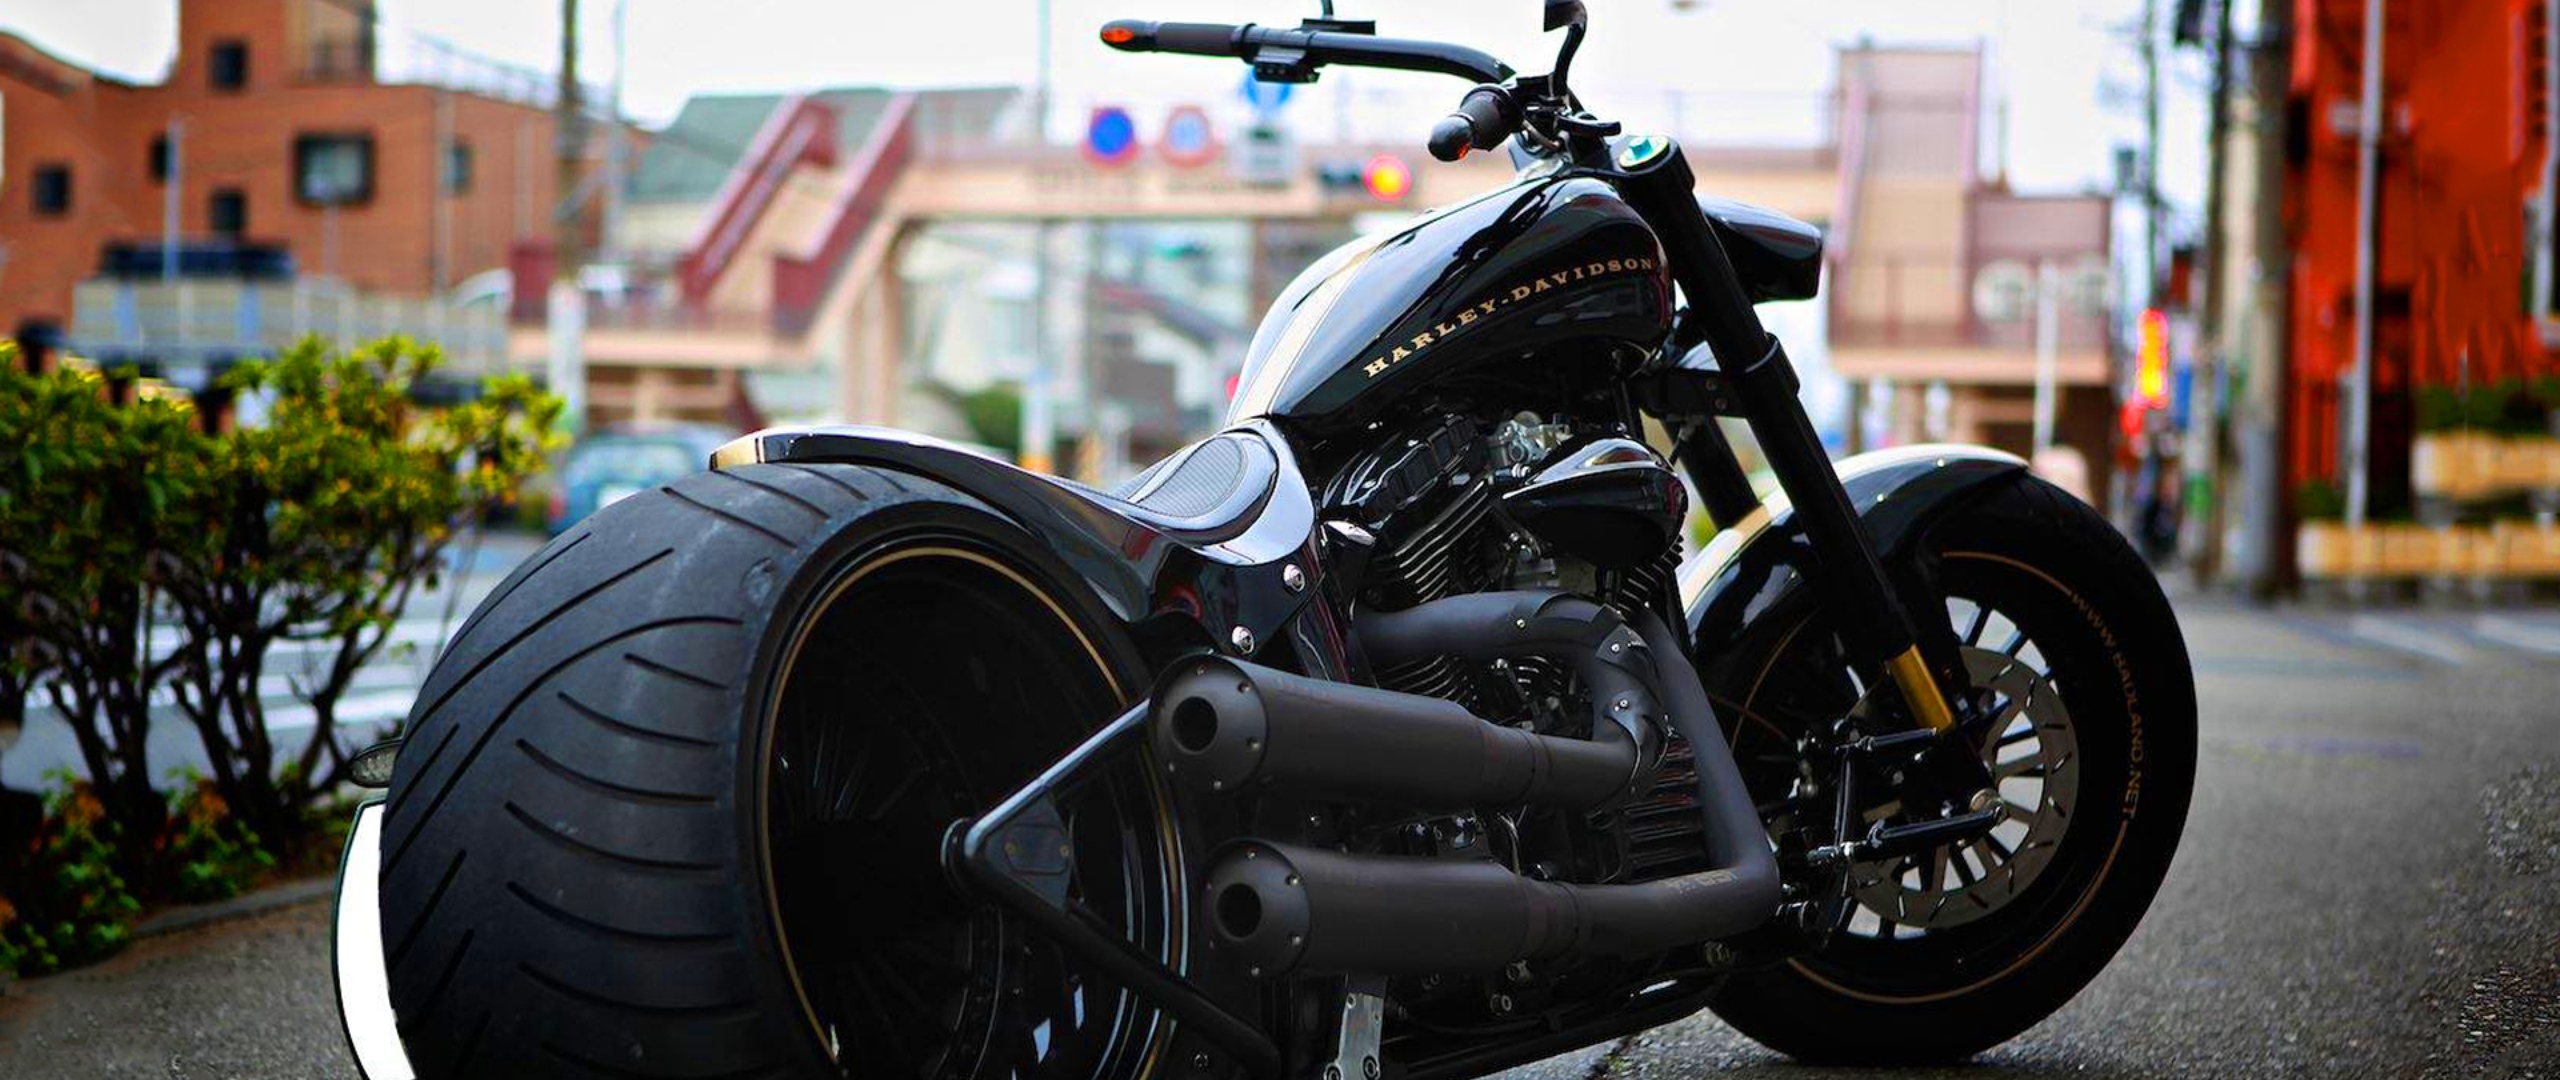 Мотоцикл Harley-Davidson без смс